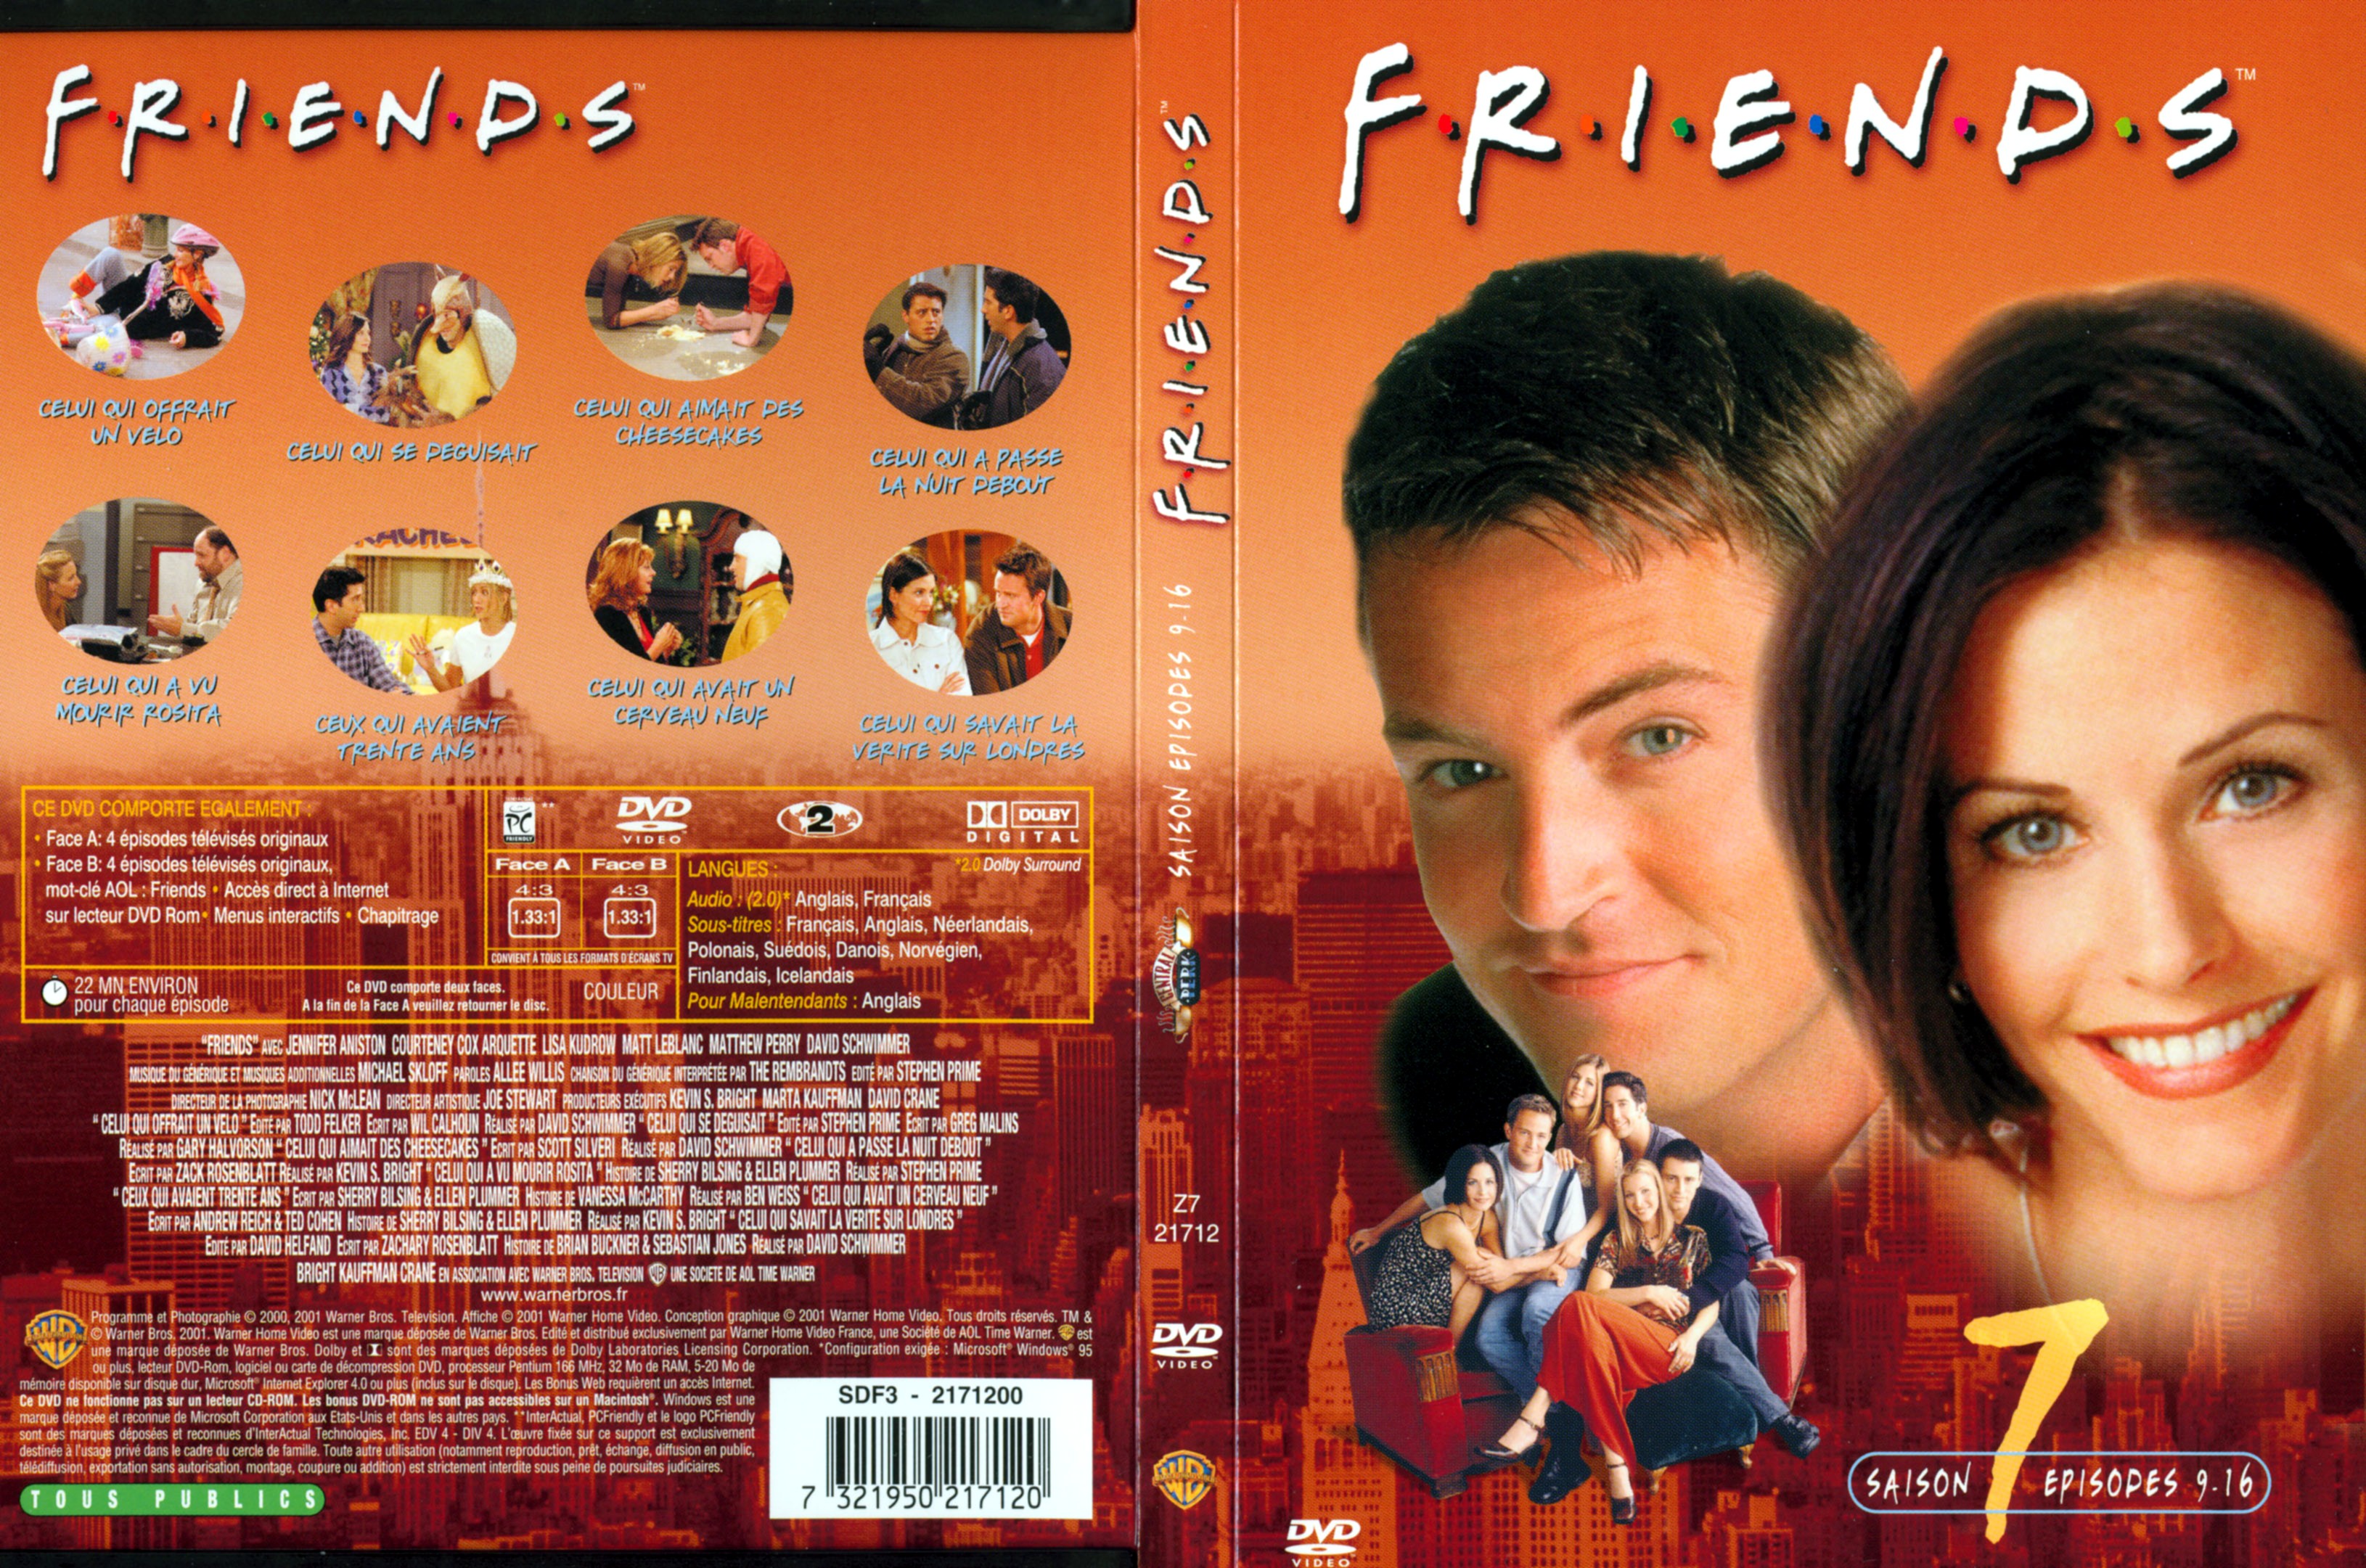 Jaquette DVD Friends saison 7 dvd 2